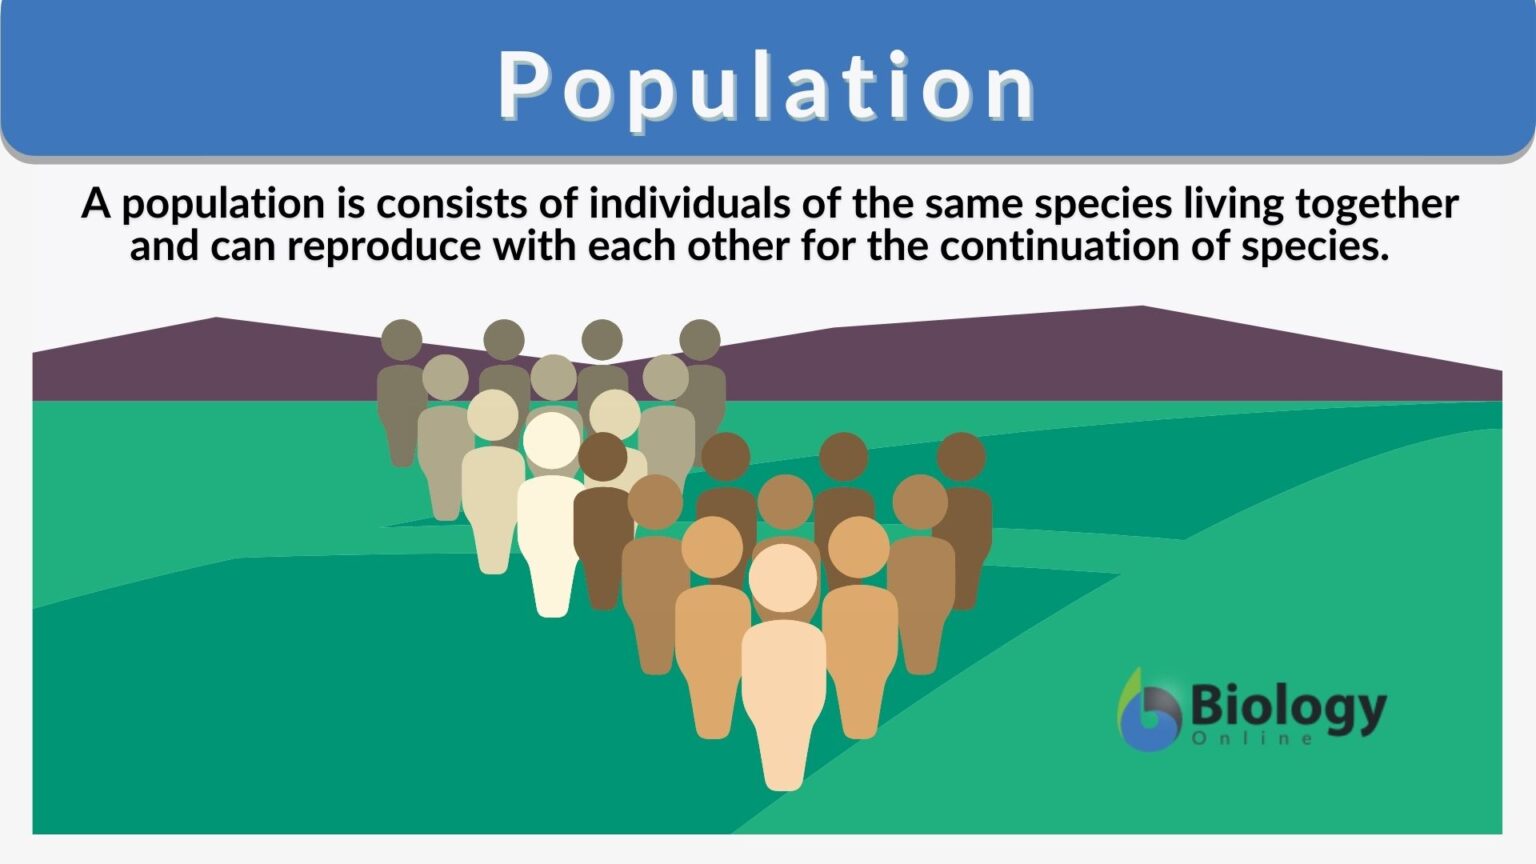 define representation by population